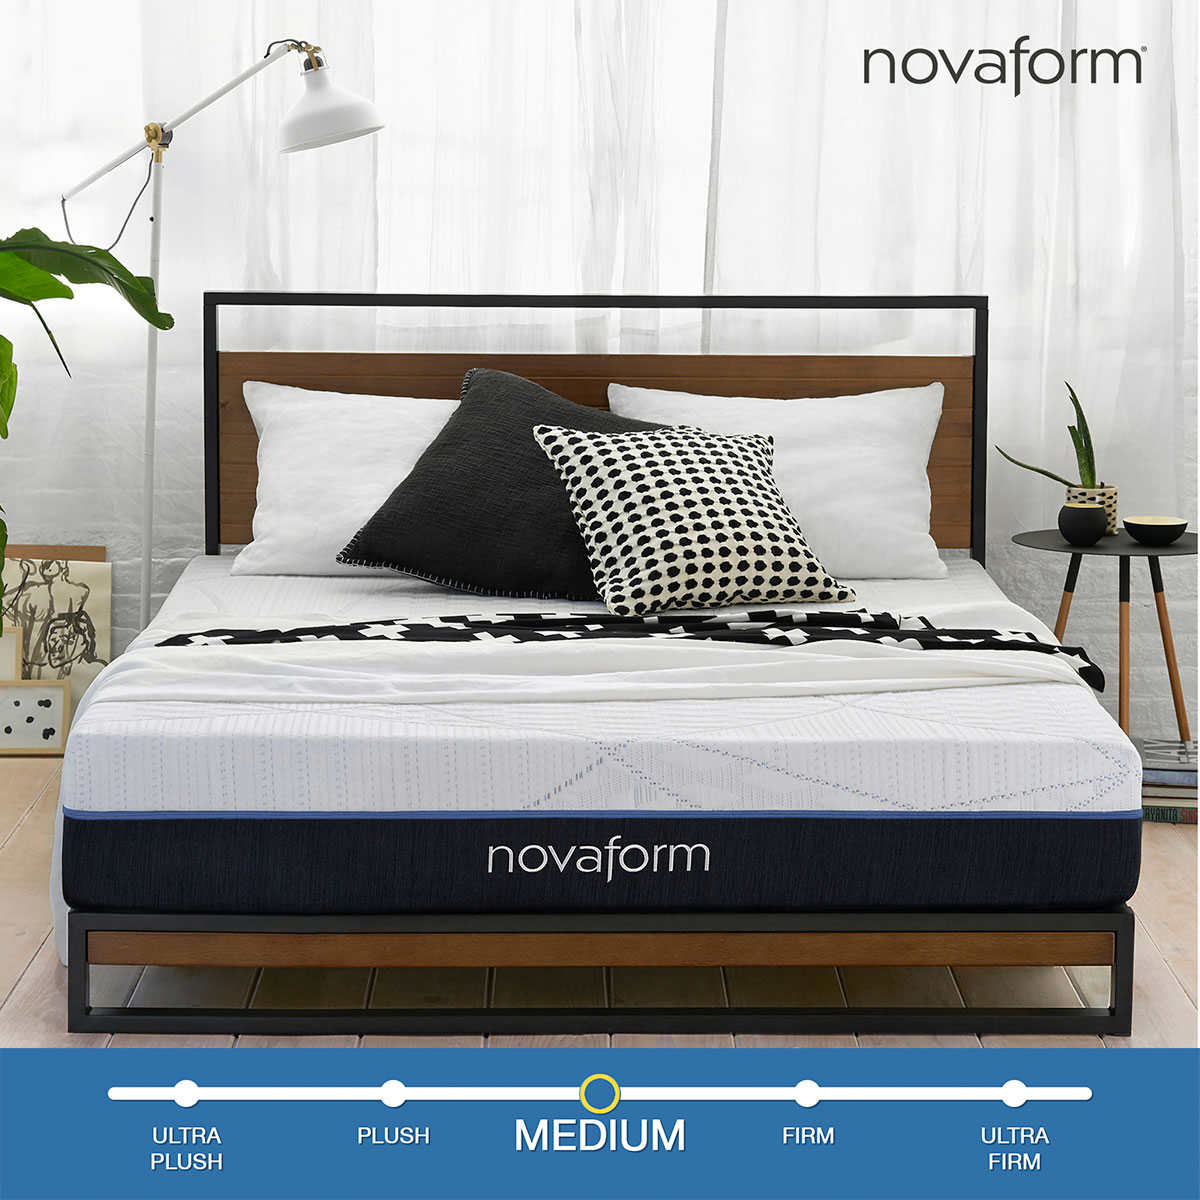 Novaform 10 Sofresh Responsive Foam, Costco Bed In A Box Twin Xl Size